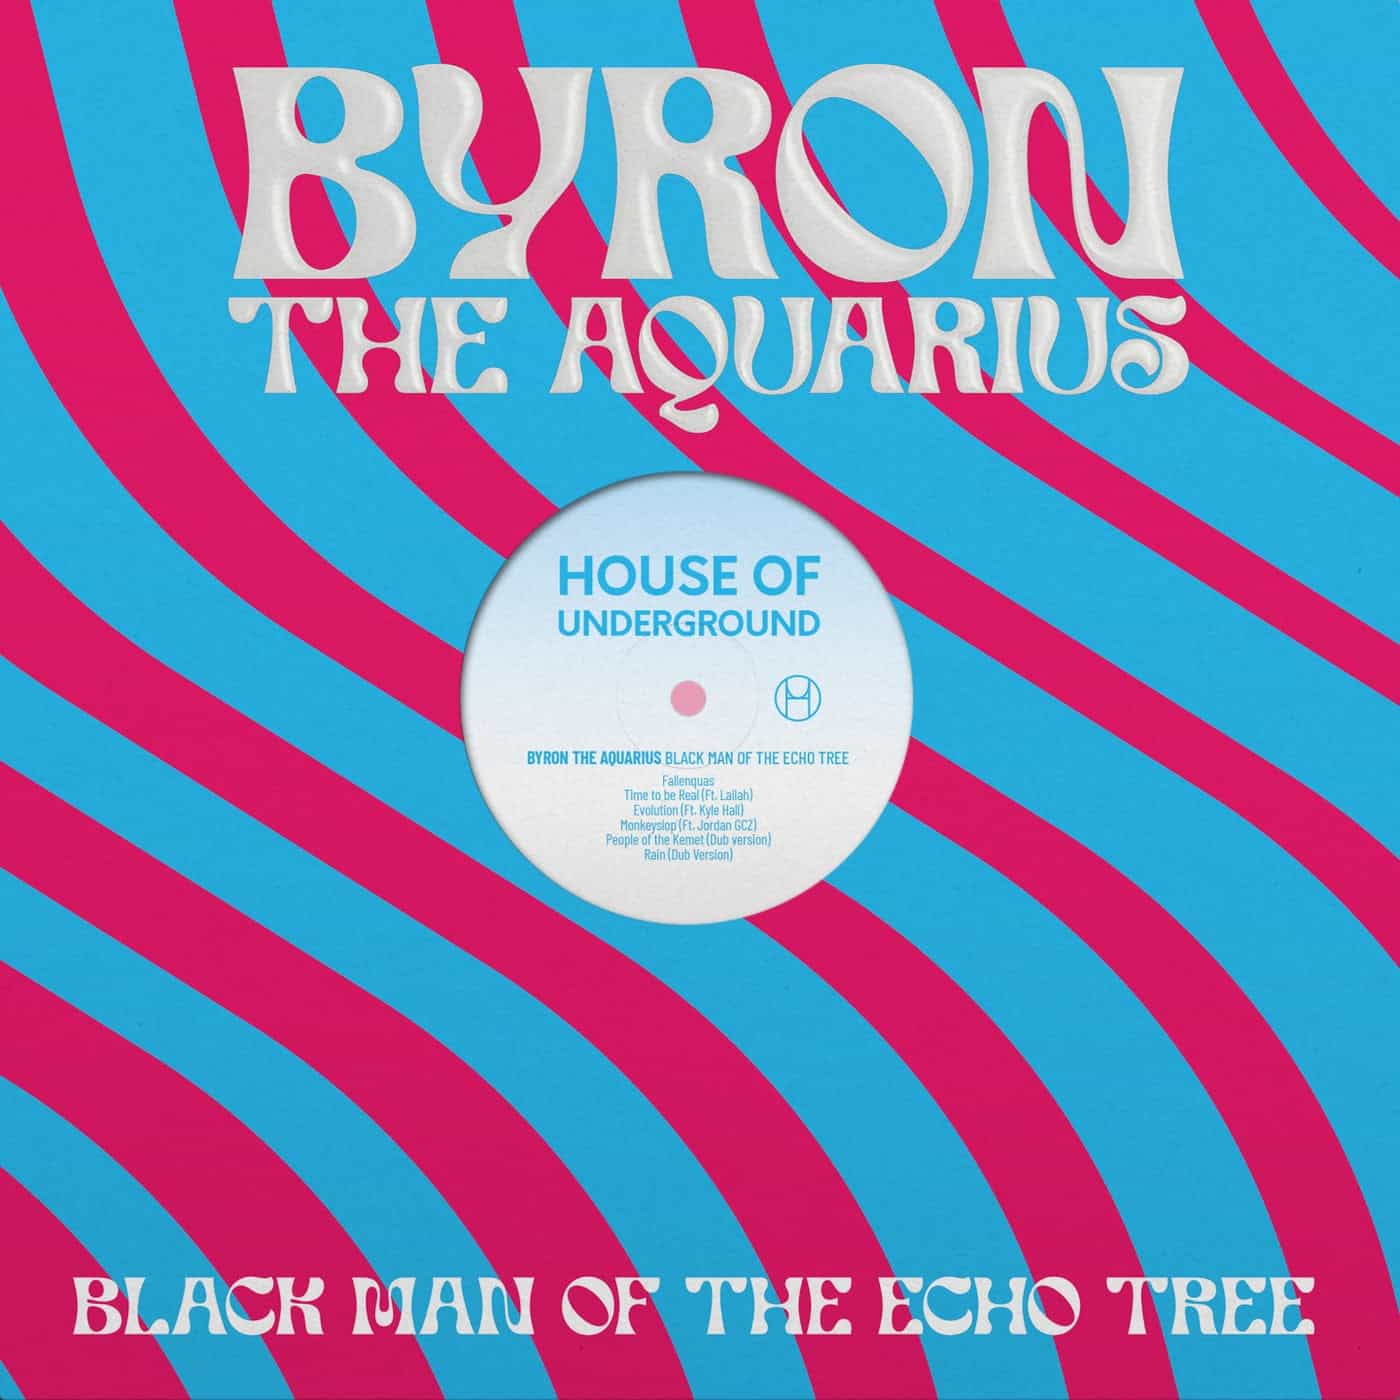 Download Byron the Aquarius, Lailah, Kyle Hall, Jordan GCZ - Black Man Of The Echo Tree on Electrobuzz